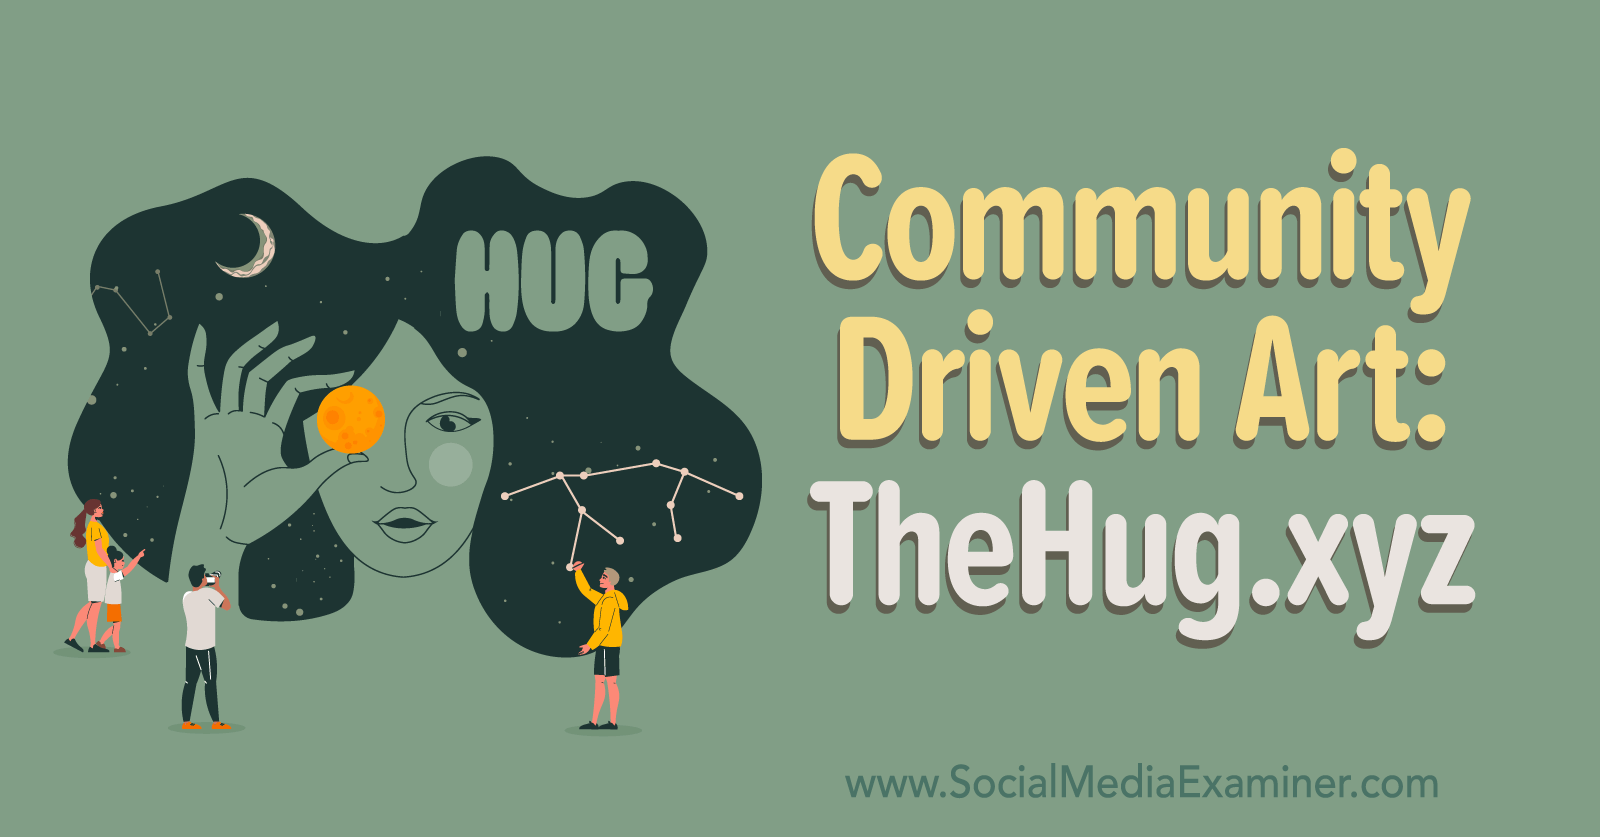 Community Driven Art: TheHug.xyz by Social Media Examiner